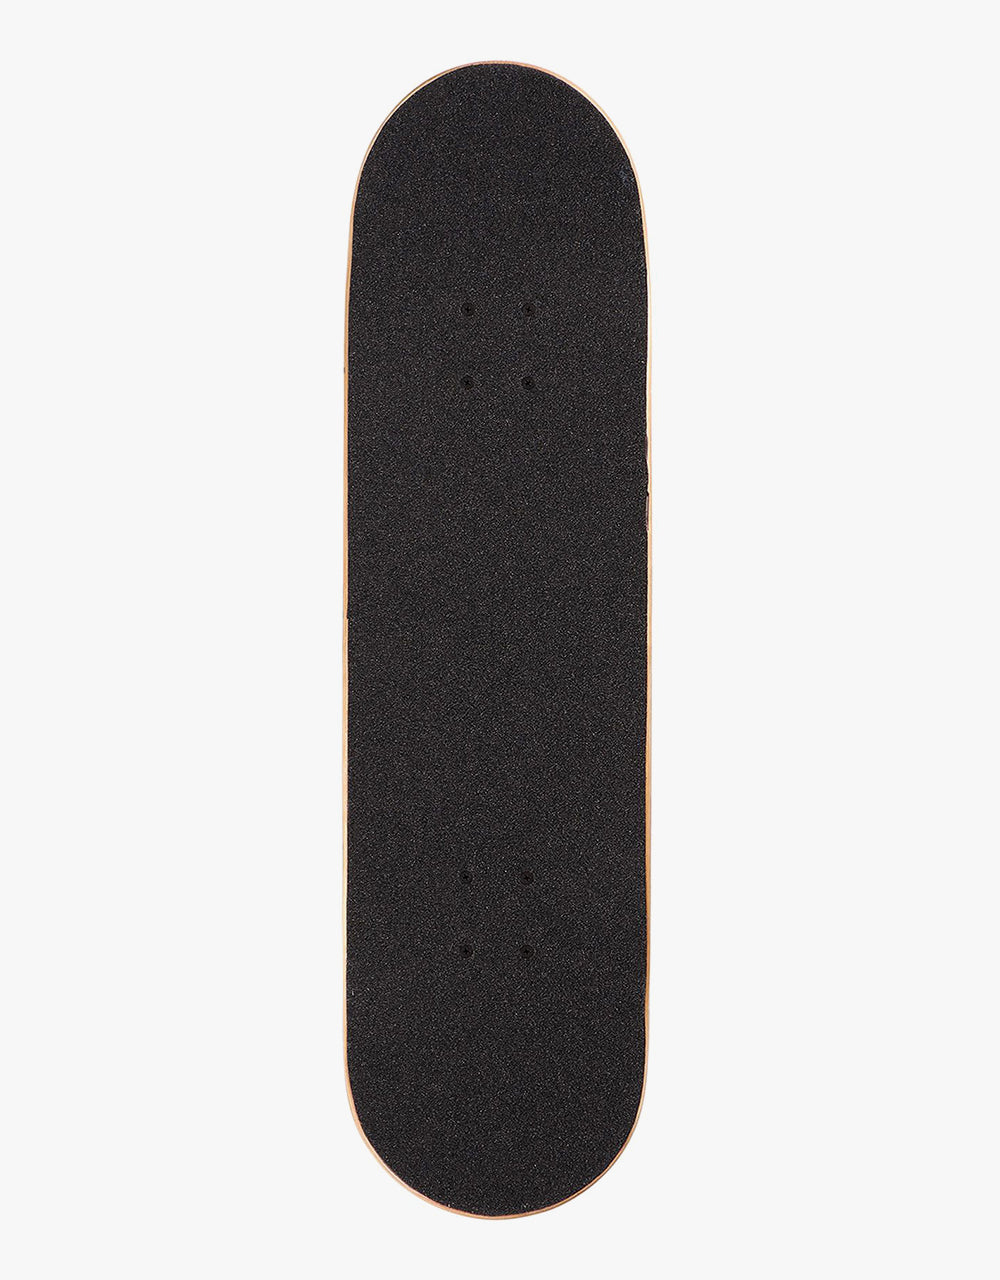 Primitive Nuevo Melt Complete Skateboard - 8.125"